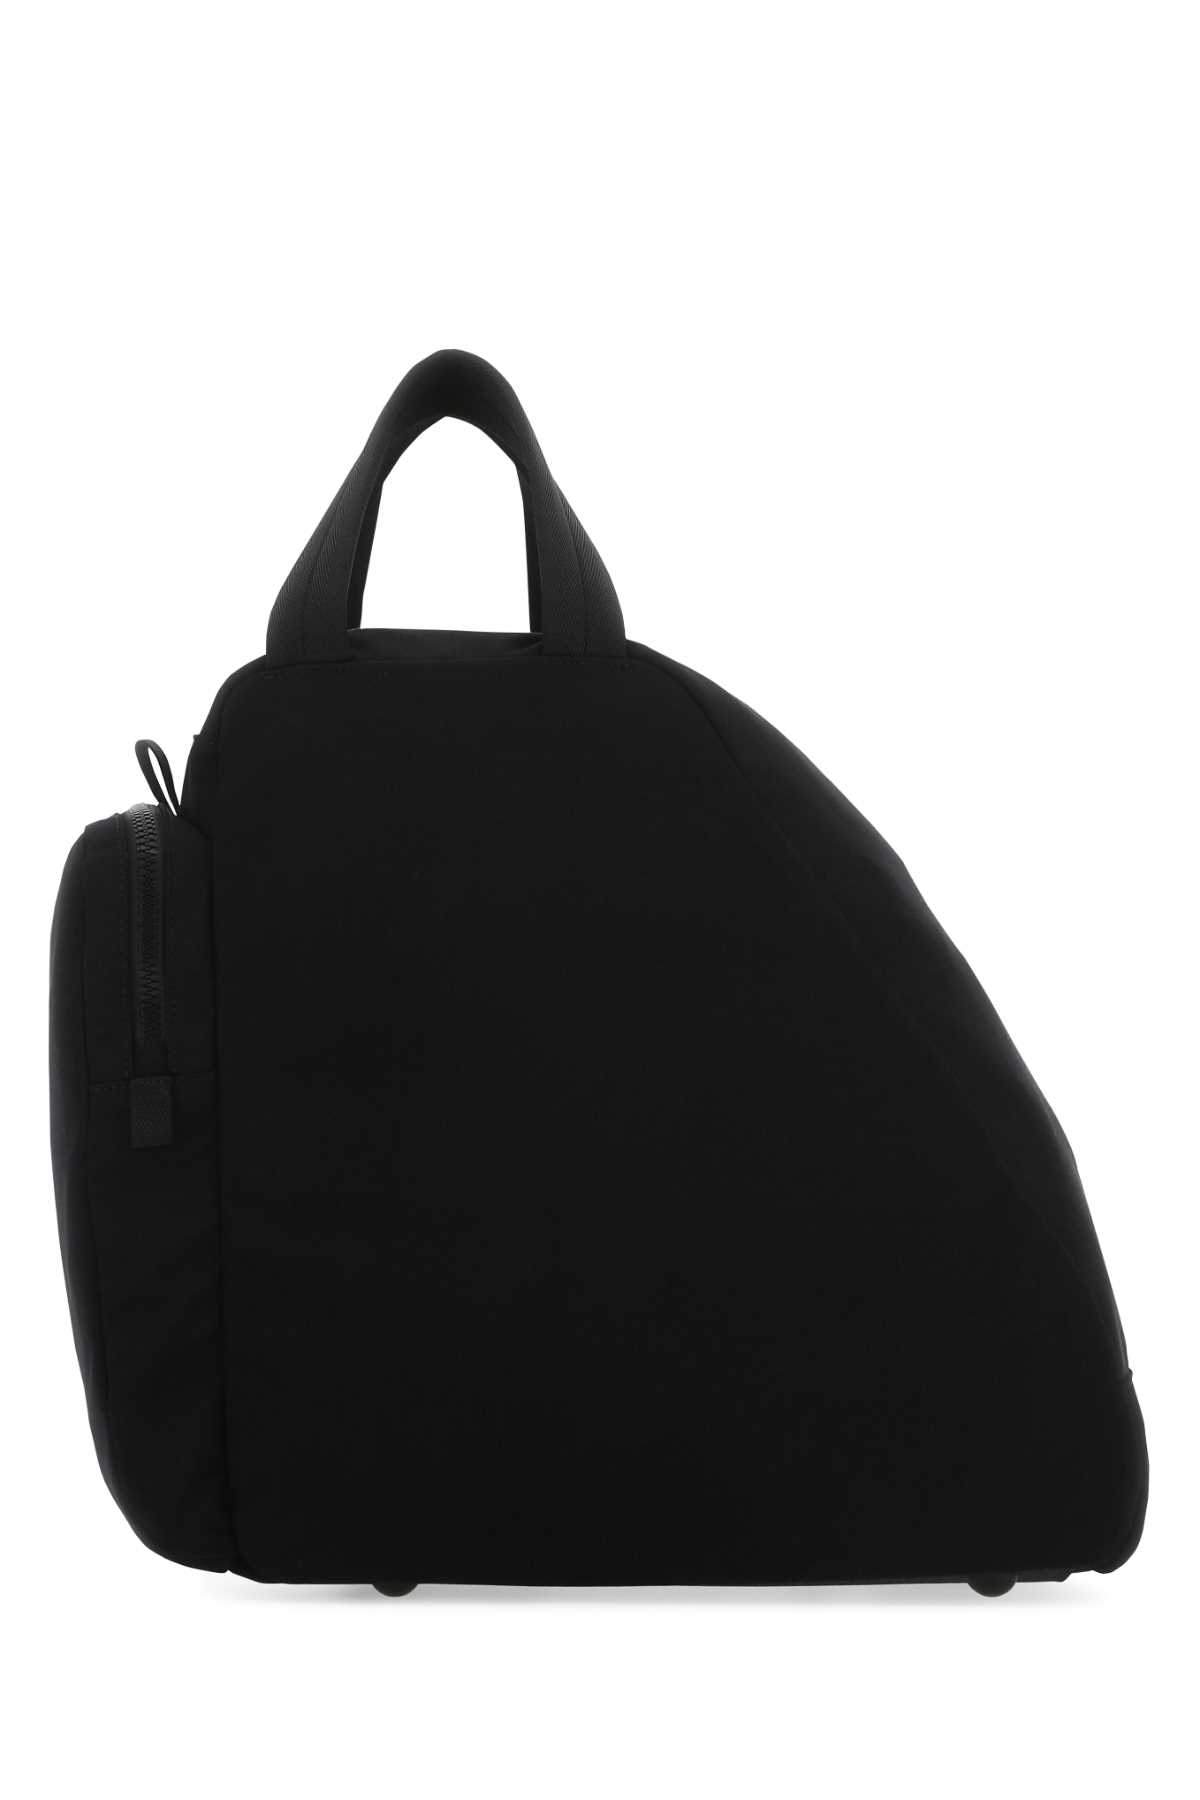 Prada Black Canvas Travel Bag